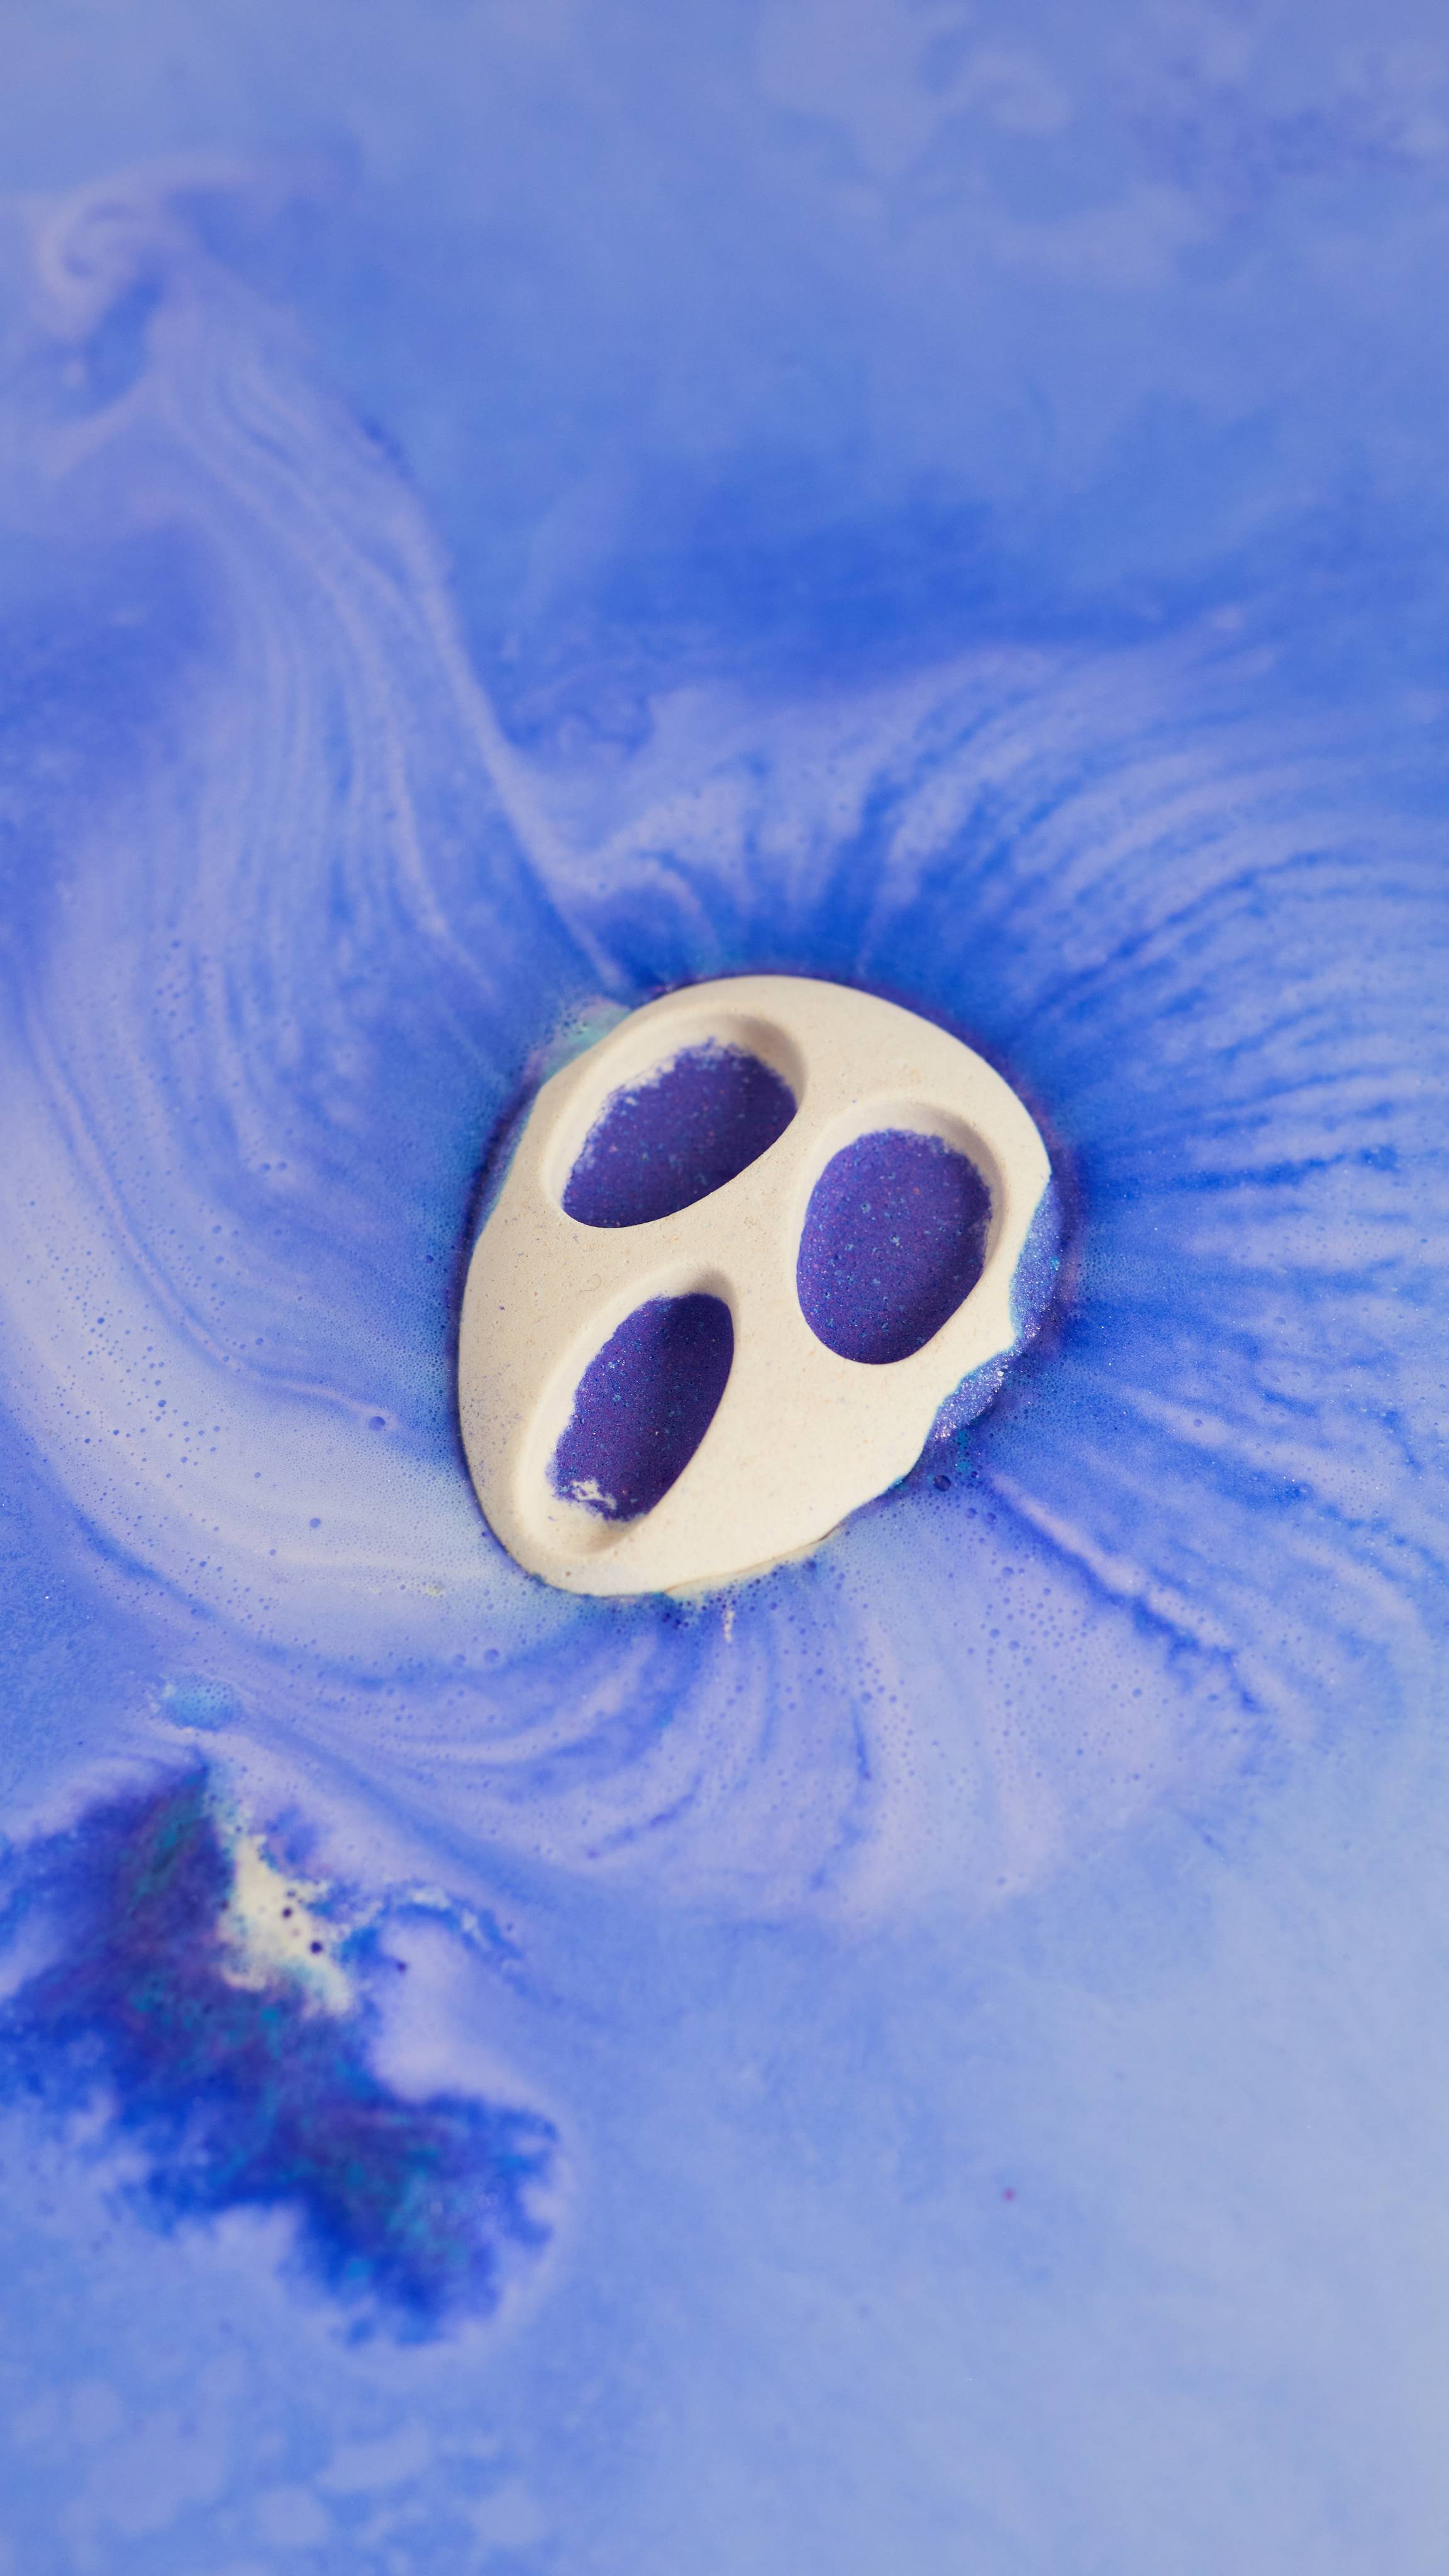 Screamo bath bomb slowly dissolves in the bath water revealing endless velvety swirls of deep indigo and blue foam.